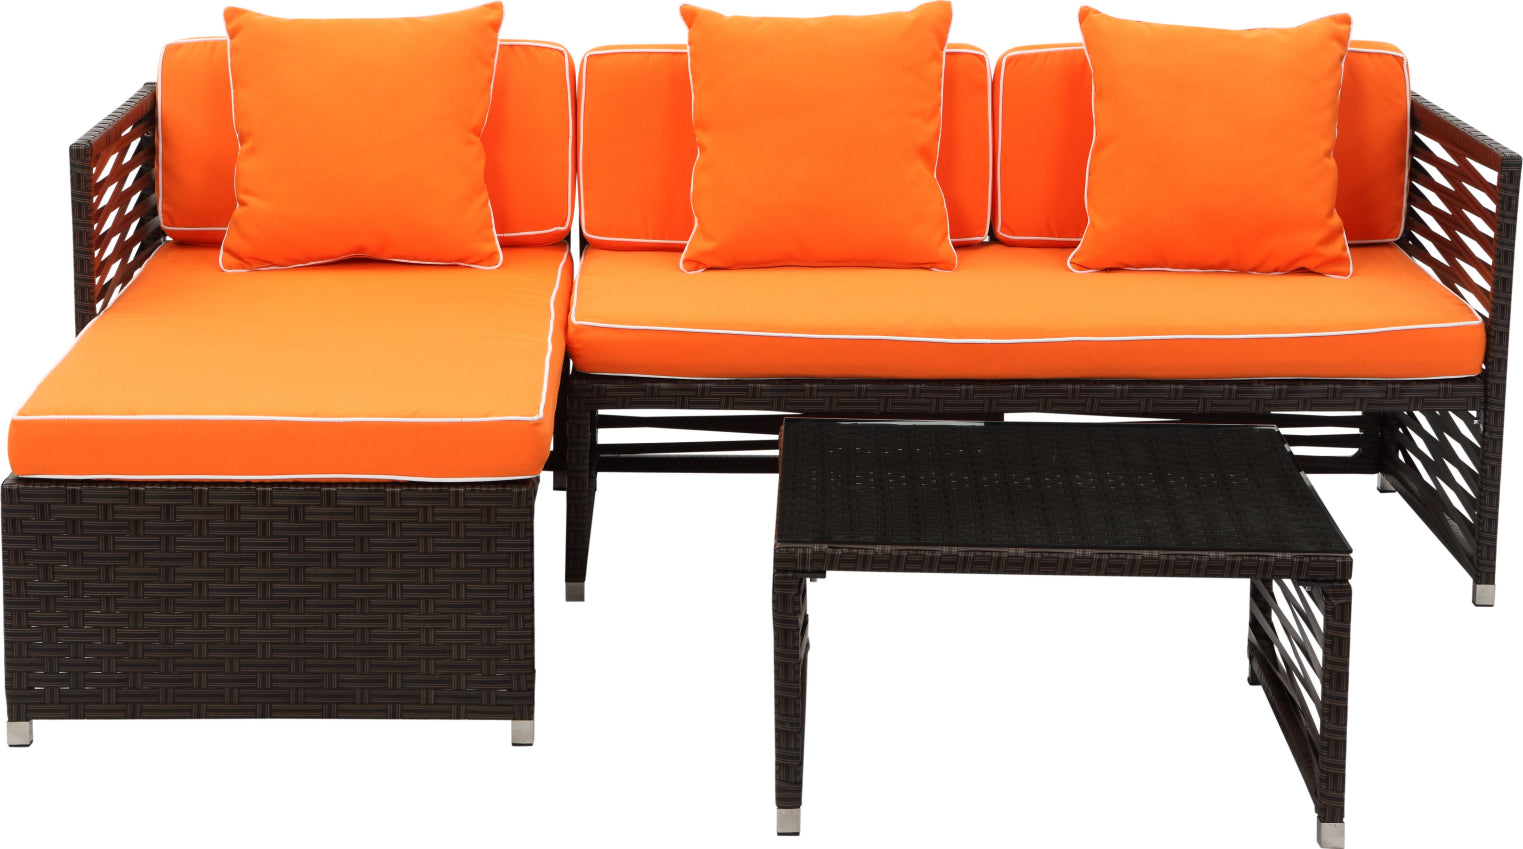 Safavieh Likoma Wicker 3 Pc Outdoor Set Brown/Orange/White Furniture main image